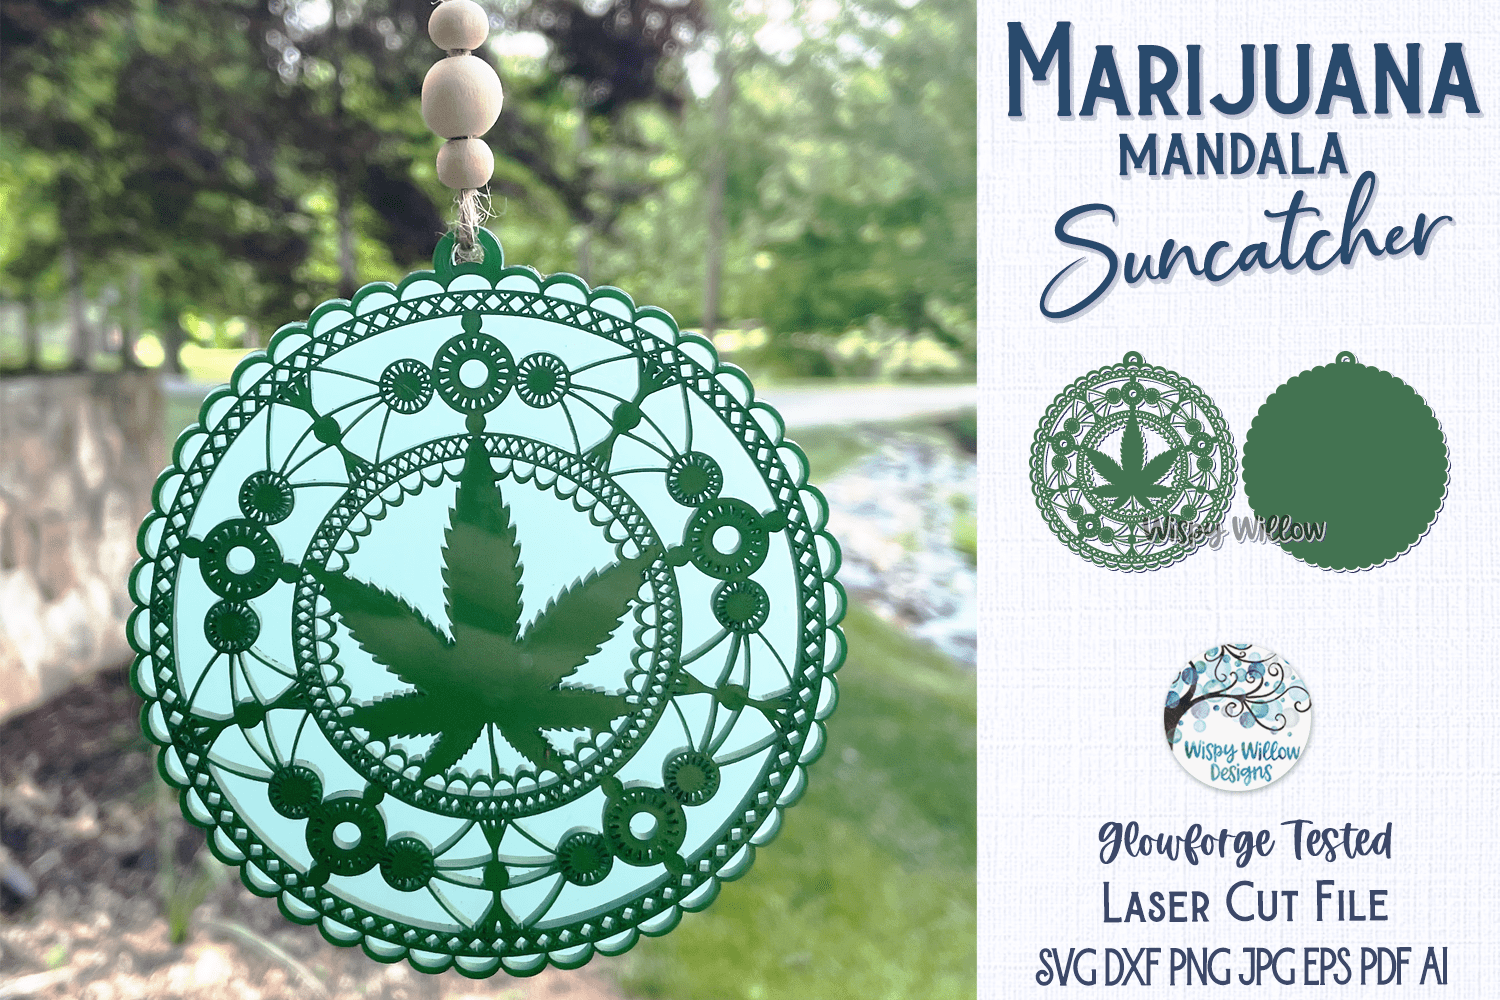 Marijuana Mandala Suncatcher for Laser or Glowforge Wispy Willow Designs Company